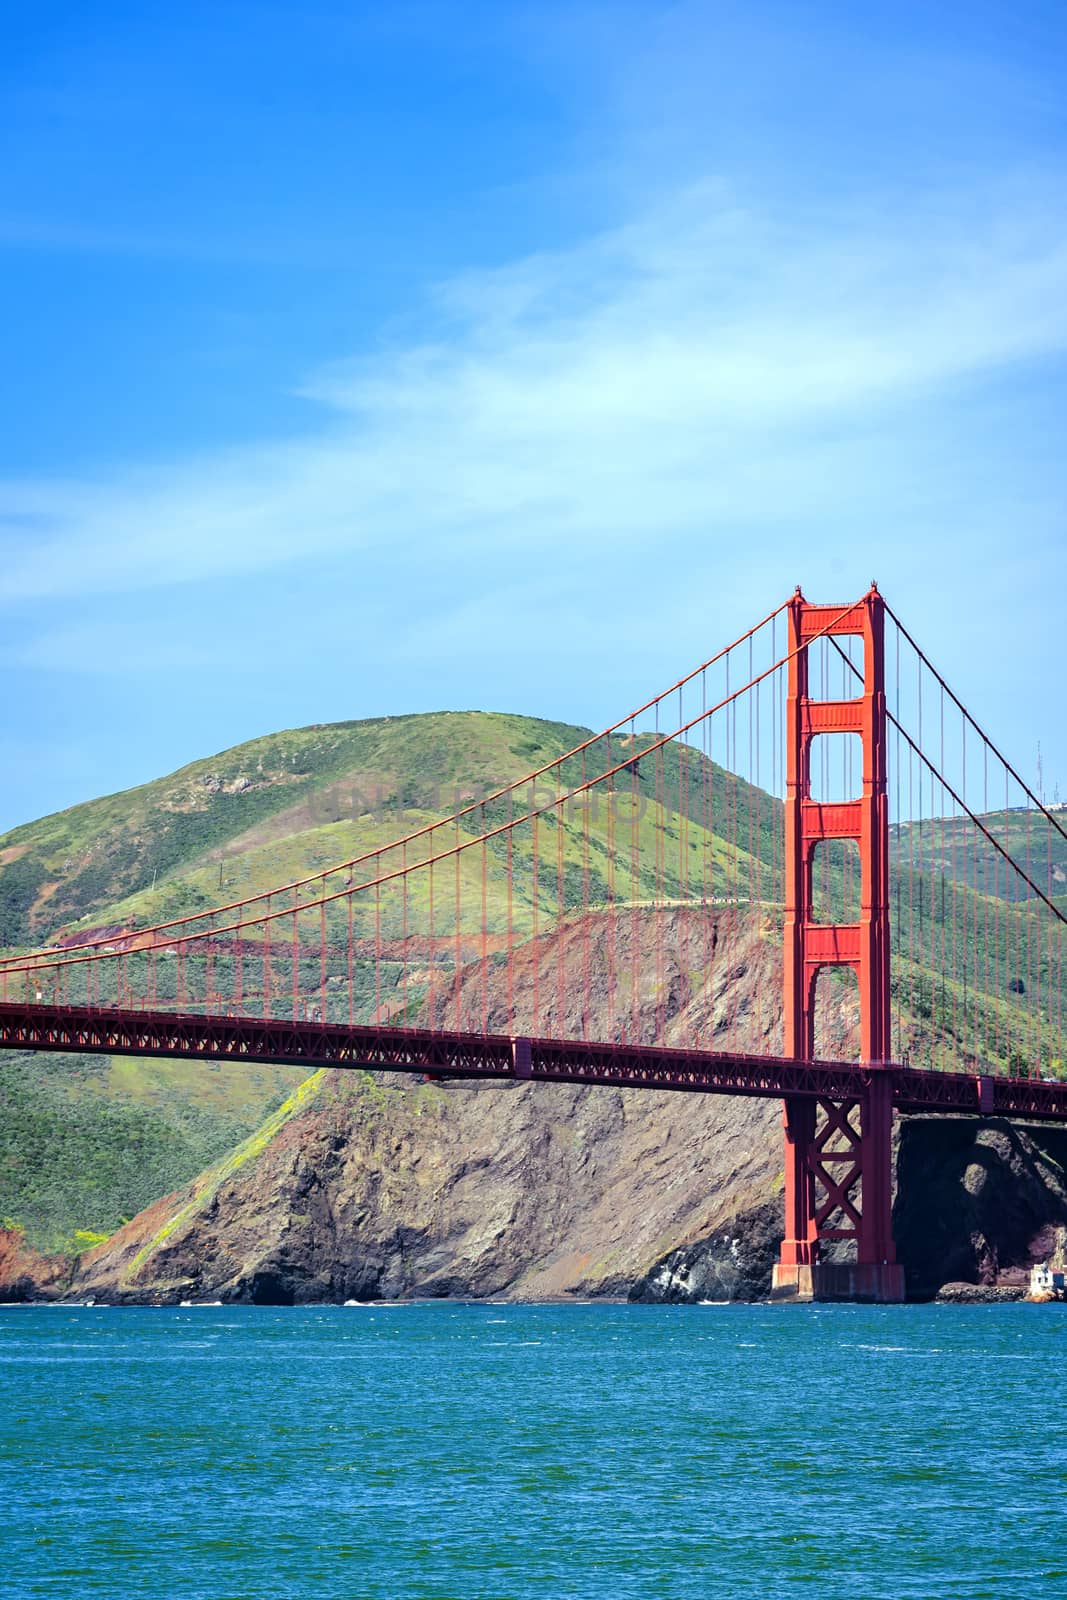 Golden Gate bridge in San Francisco California USA West Coast of Pacific Ocean